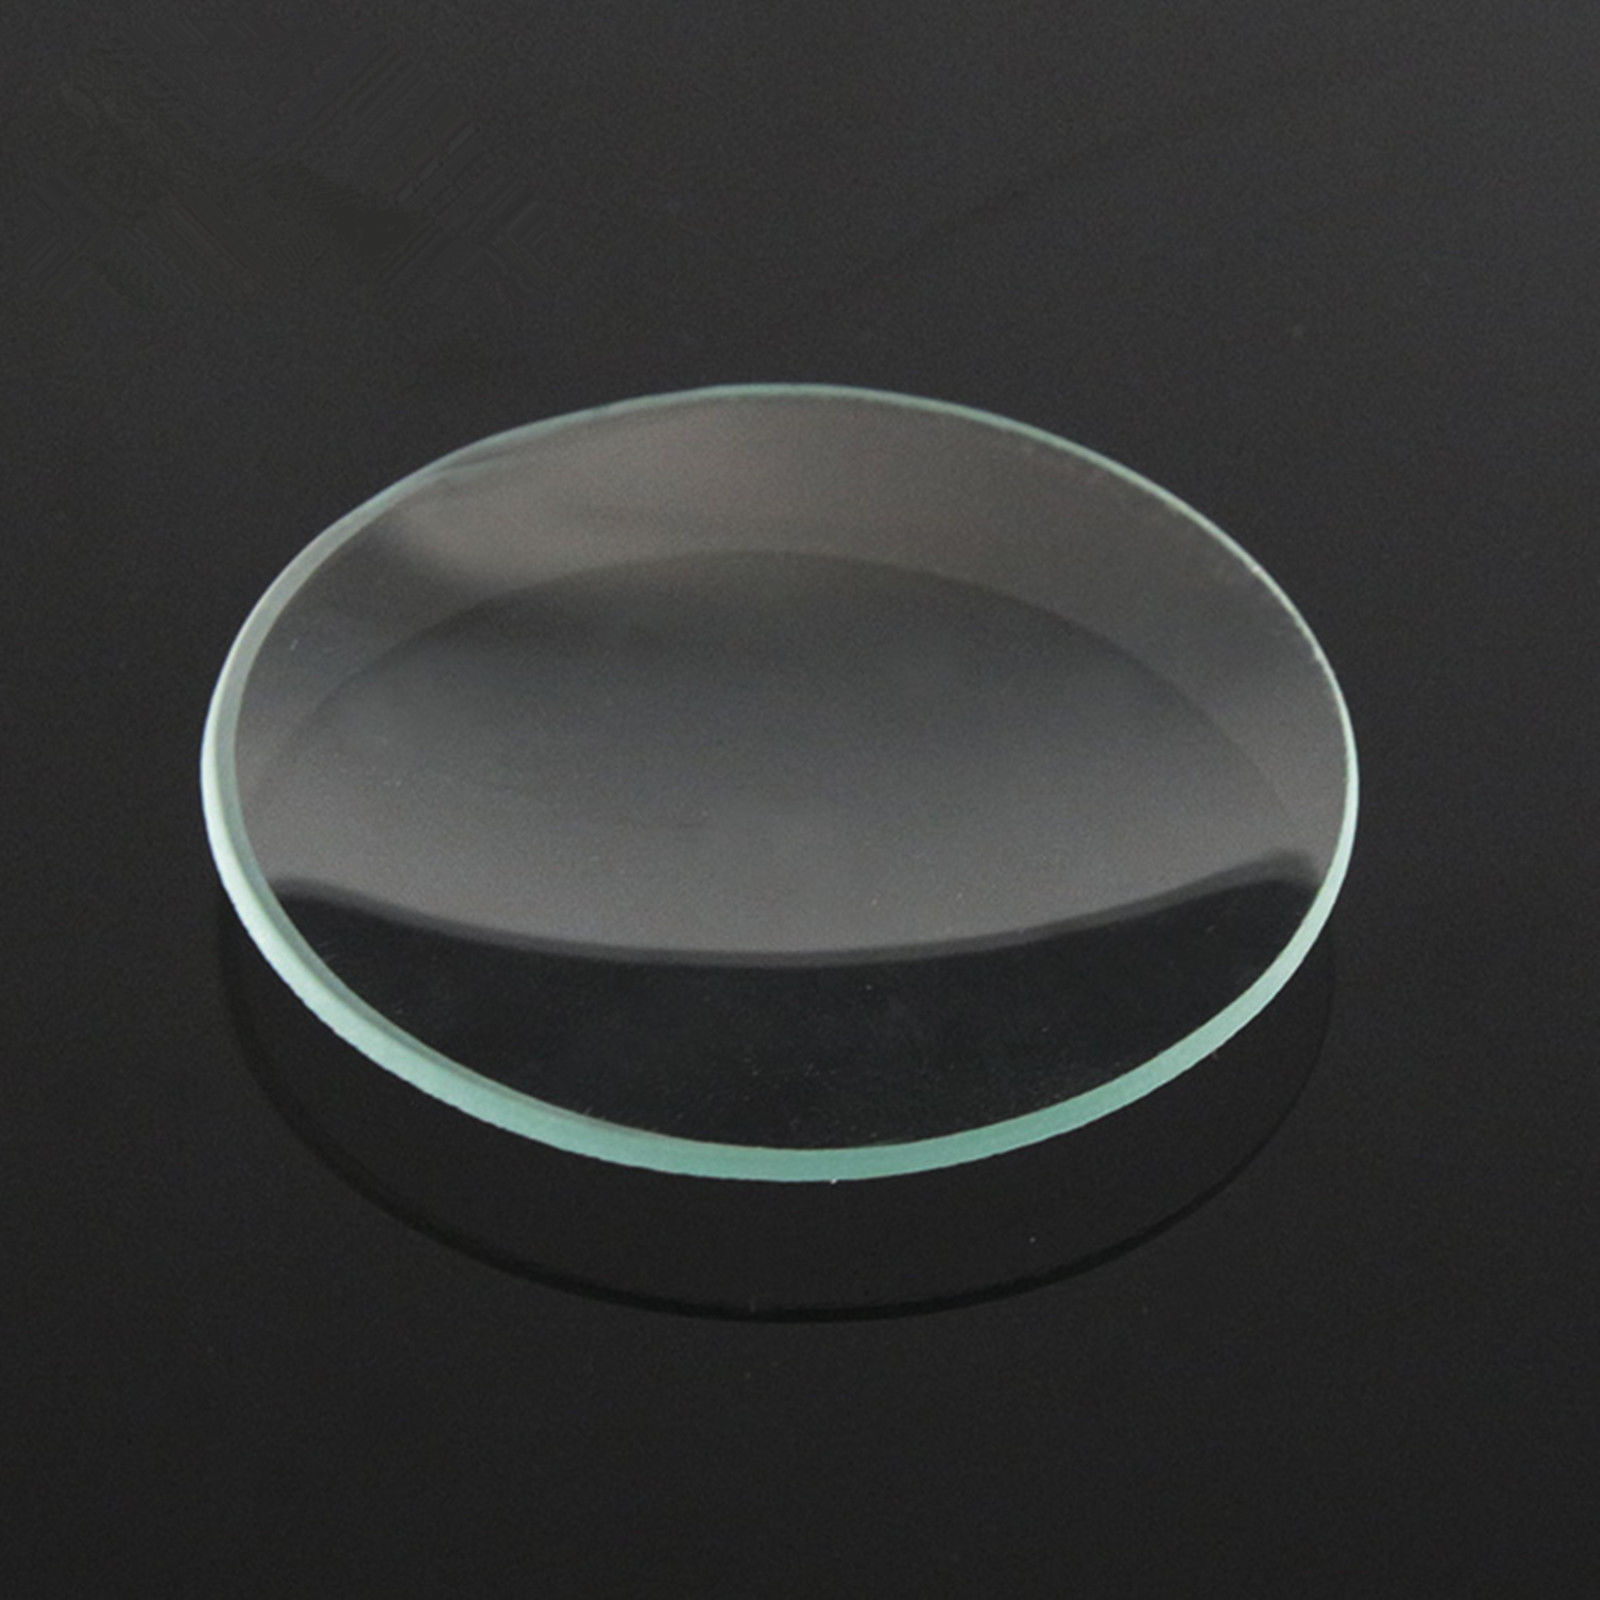 100mm, laboratorie ur glas skål, overflade disk, ydre diameter 10cm,10 stk / parti